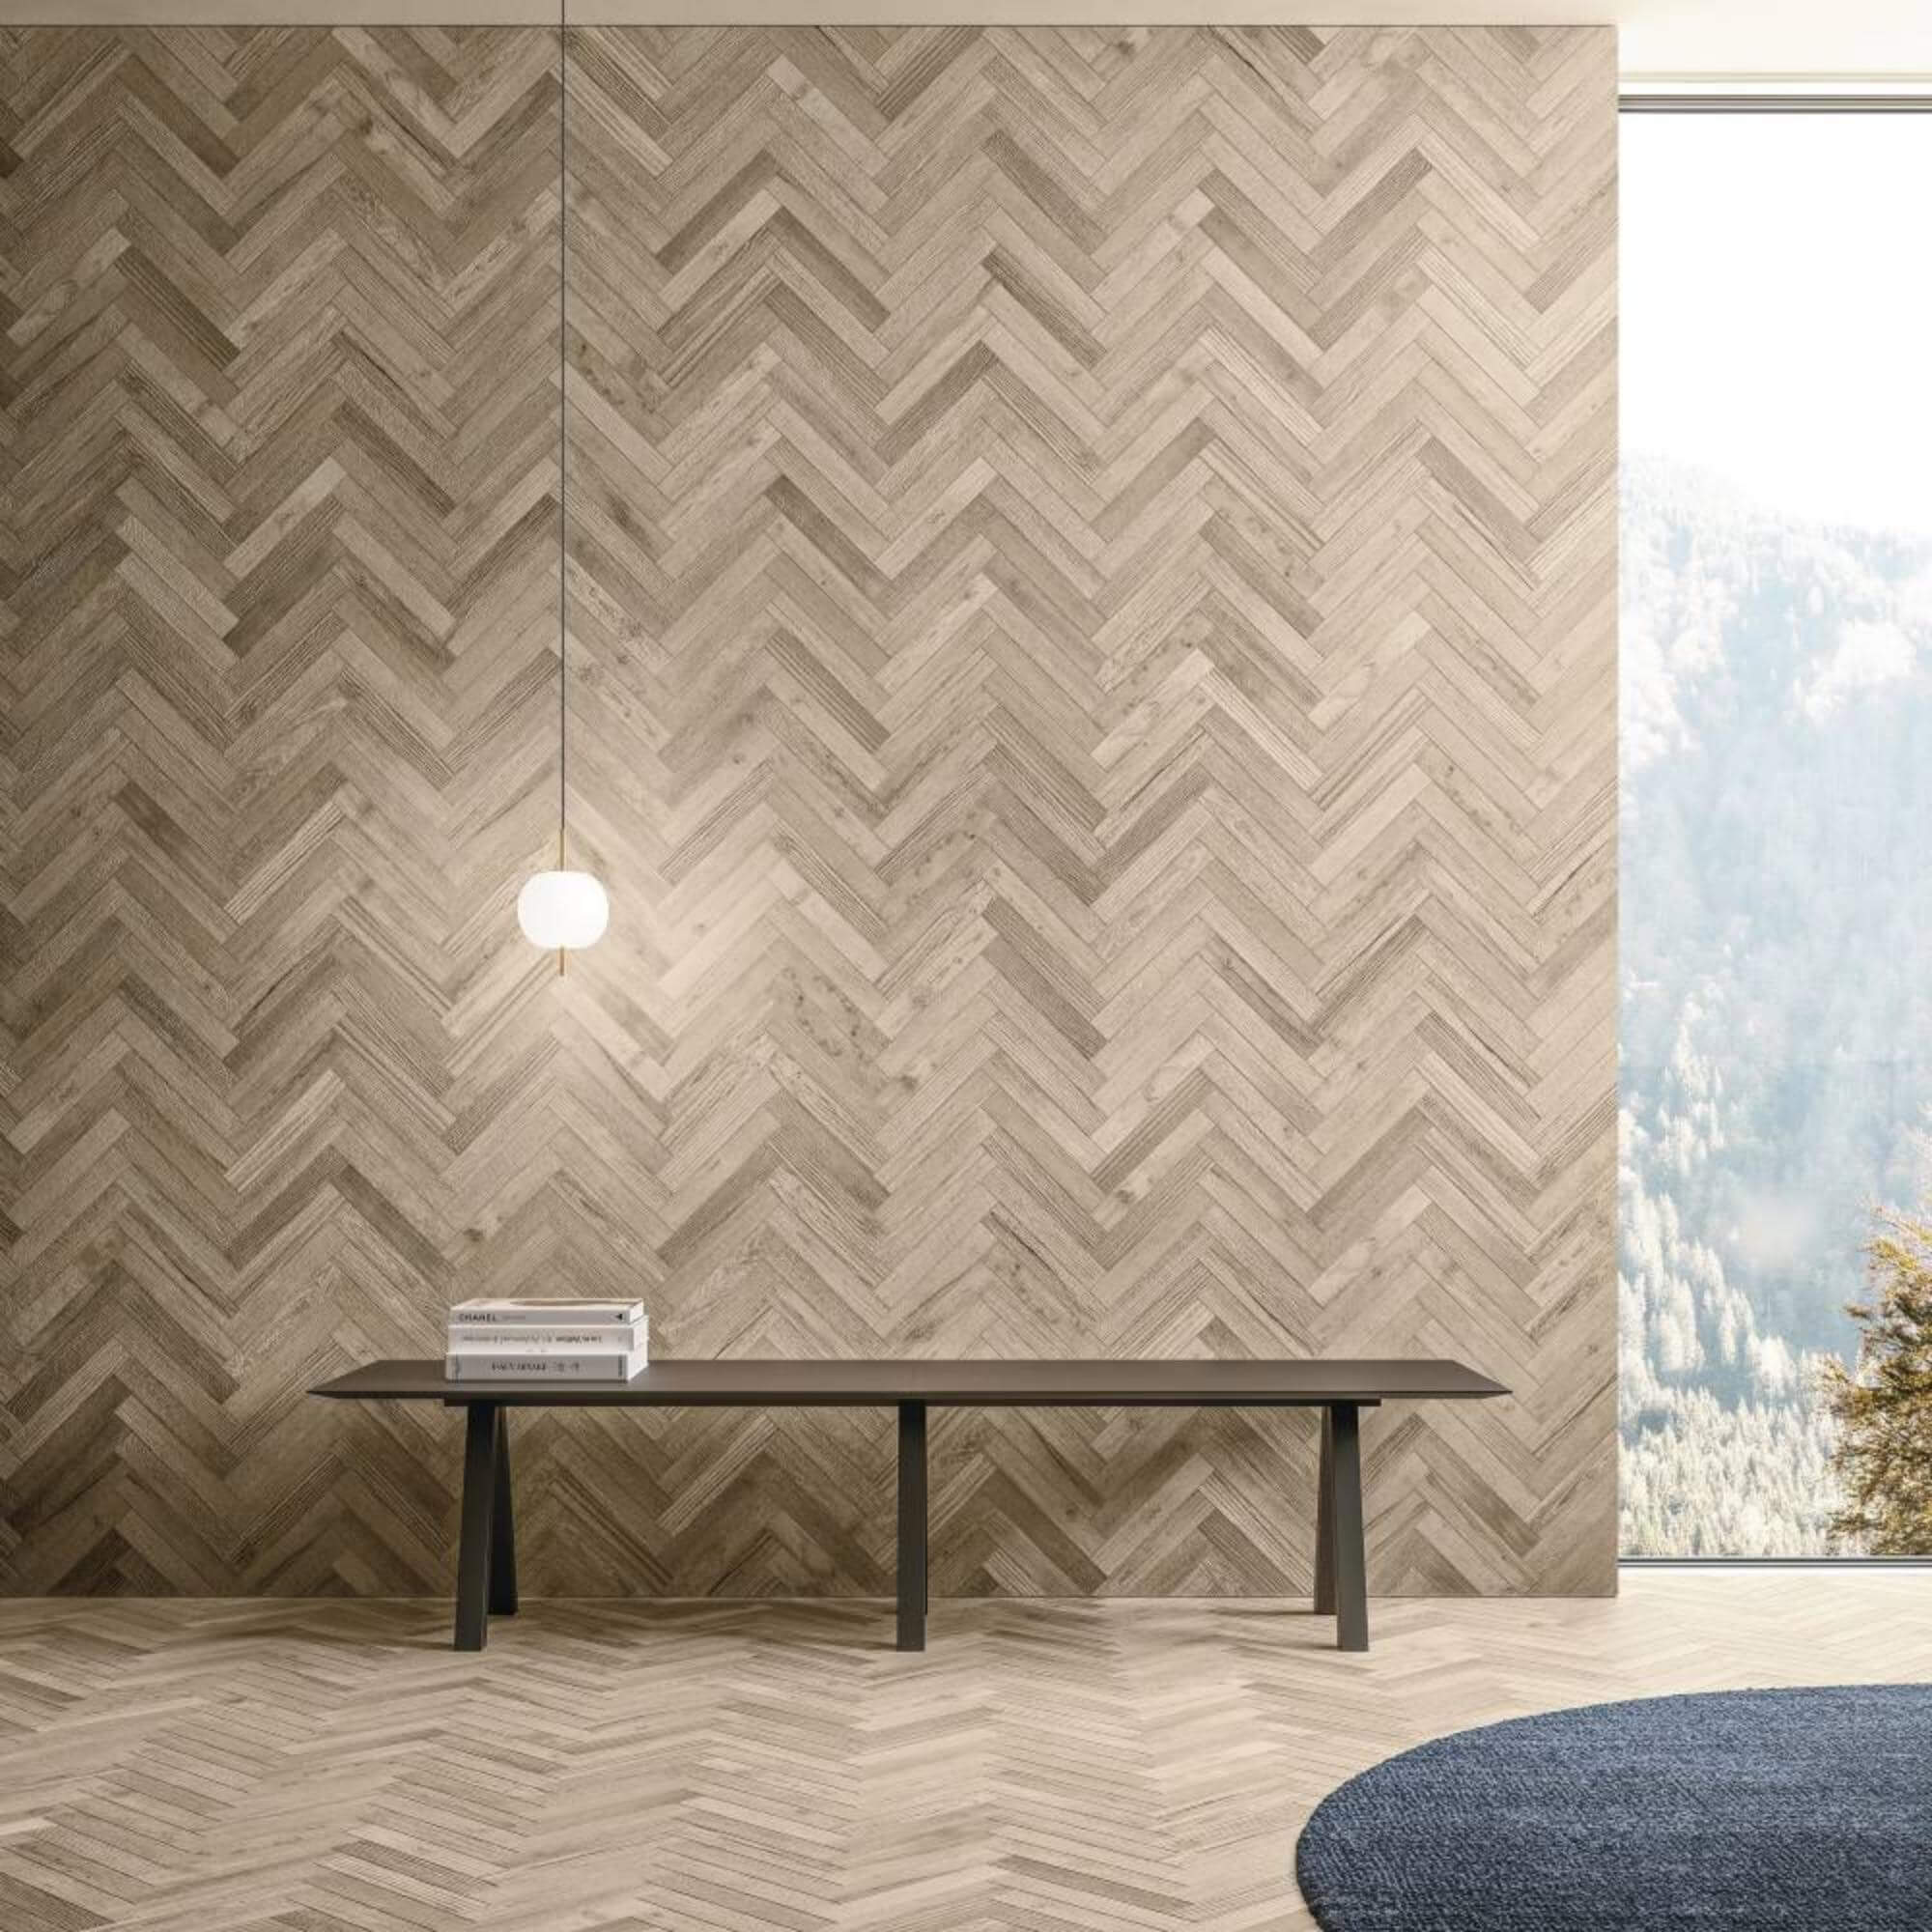 Cortina heringbone tile in a room setting